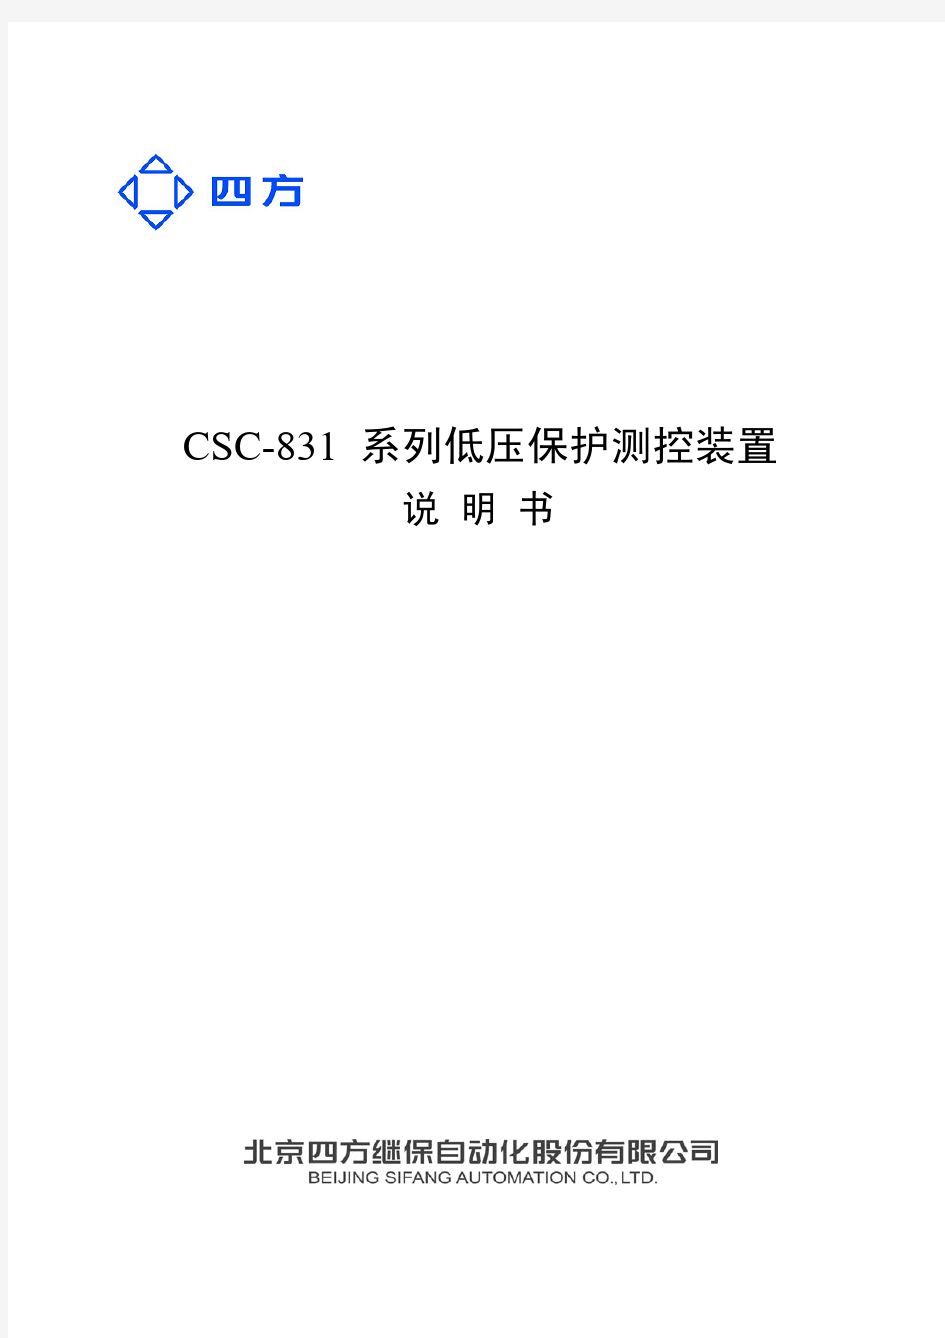 CSC-831系列低压保护测控装置说明书